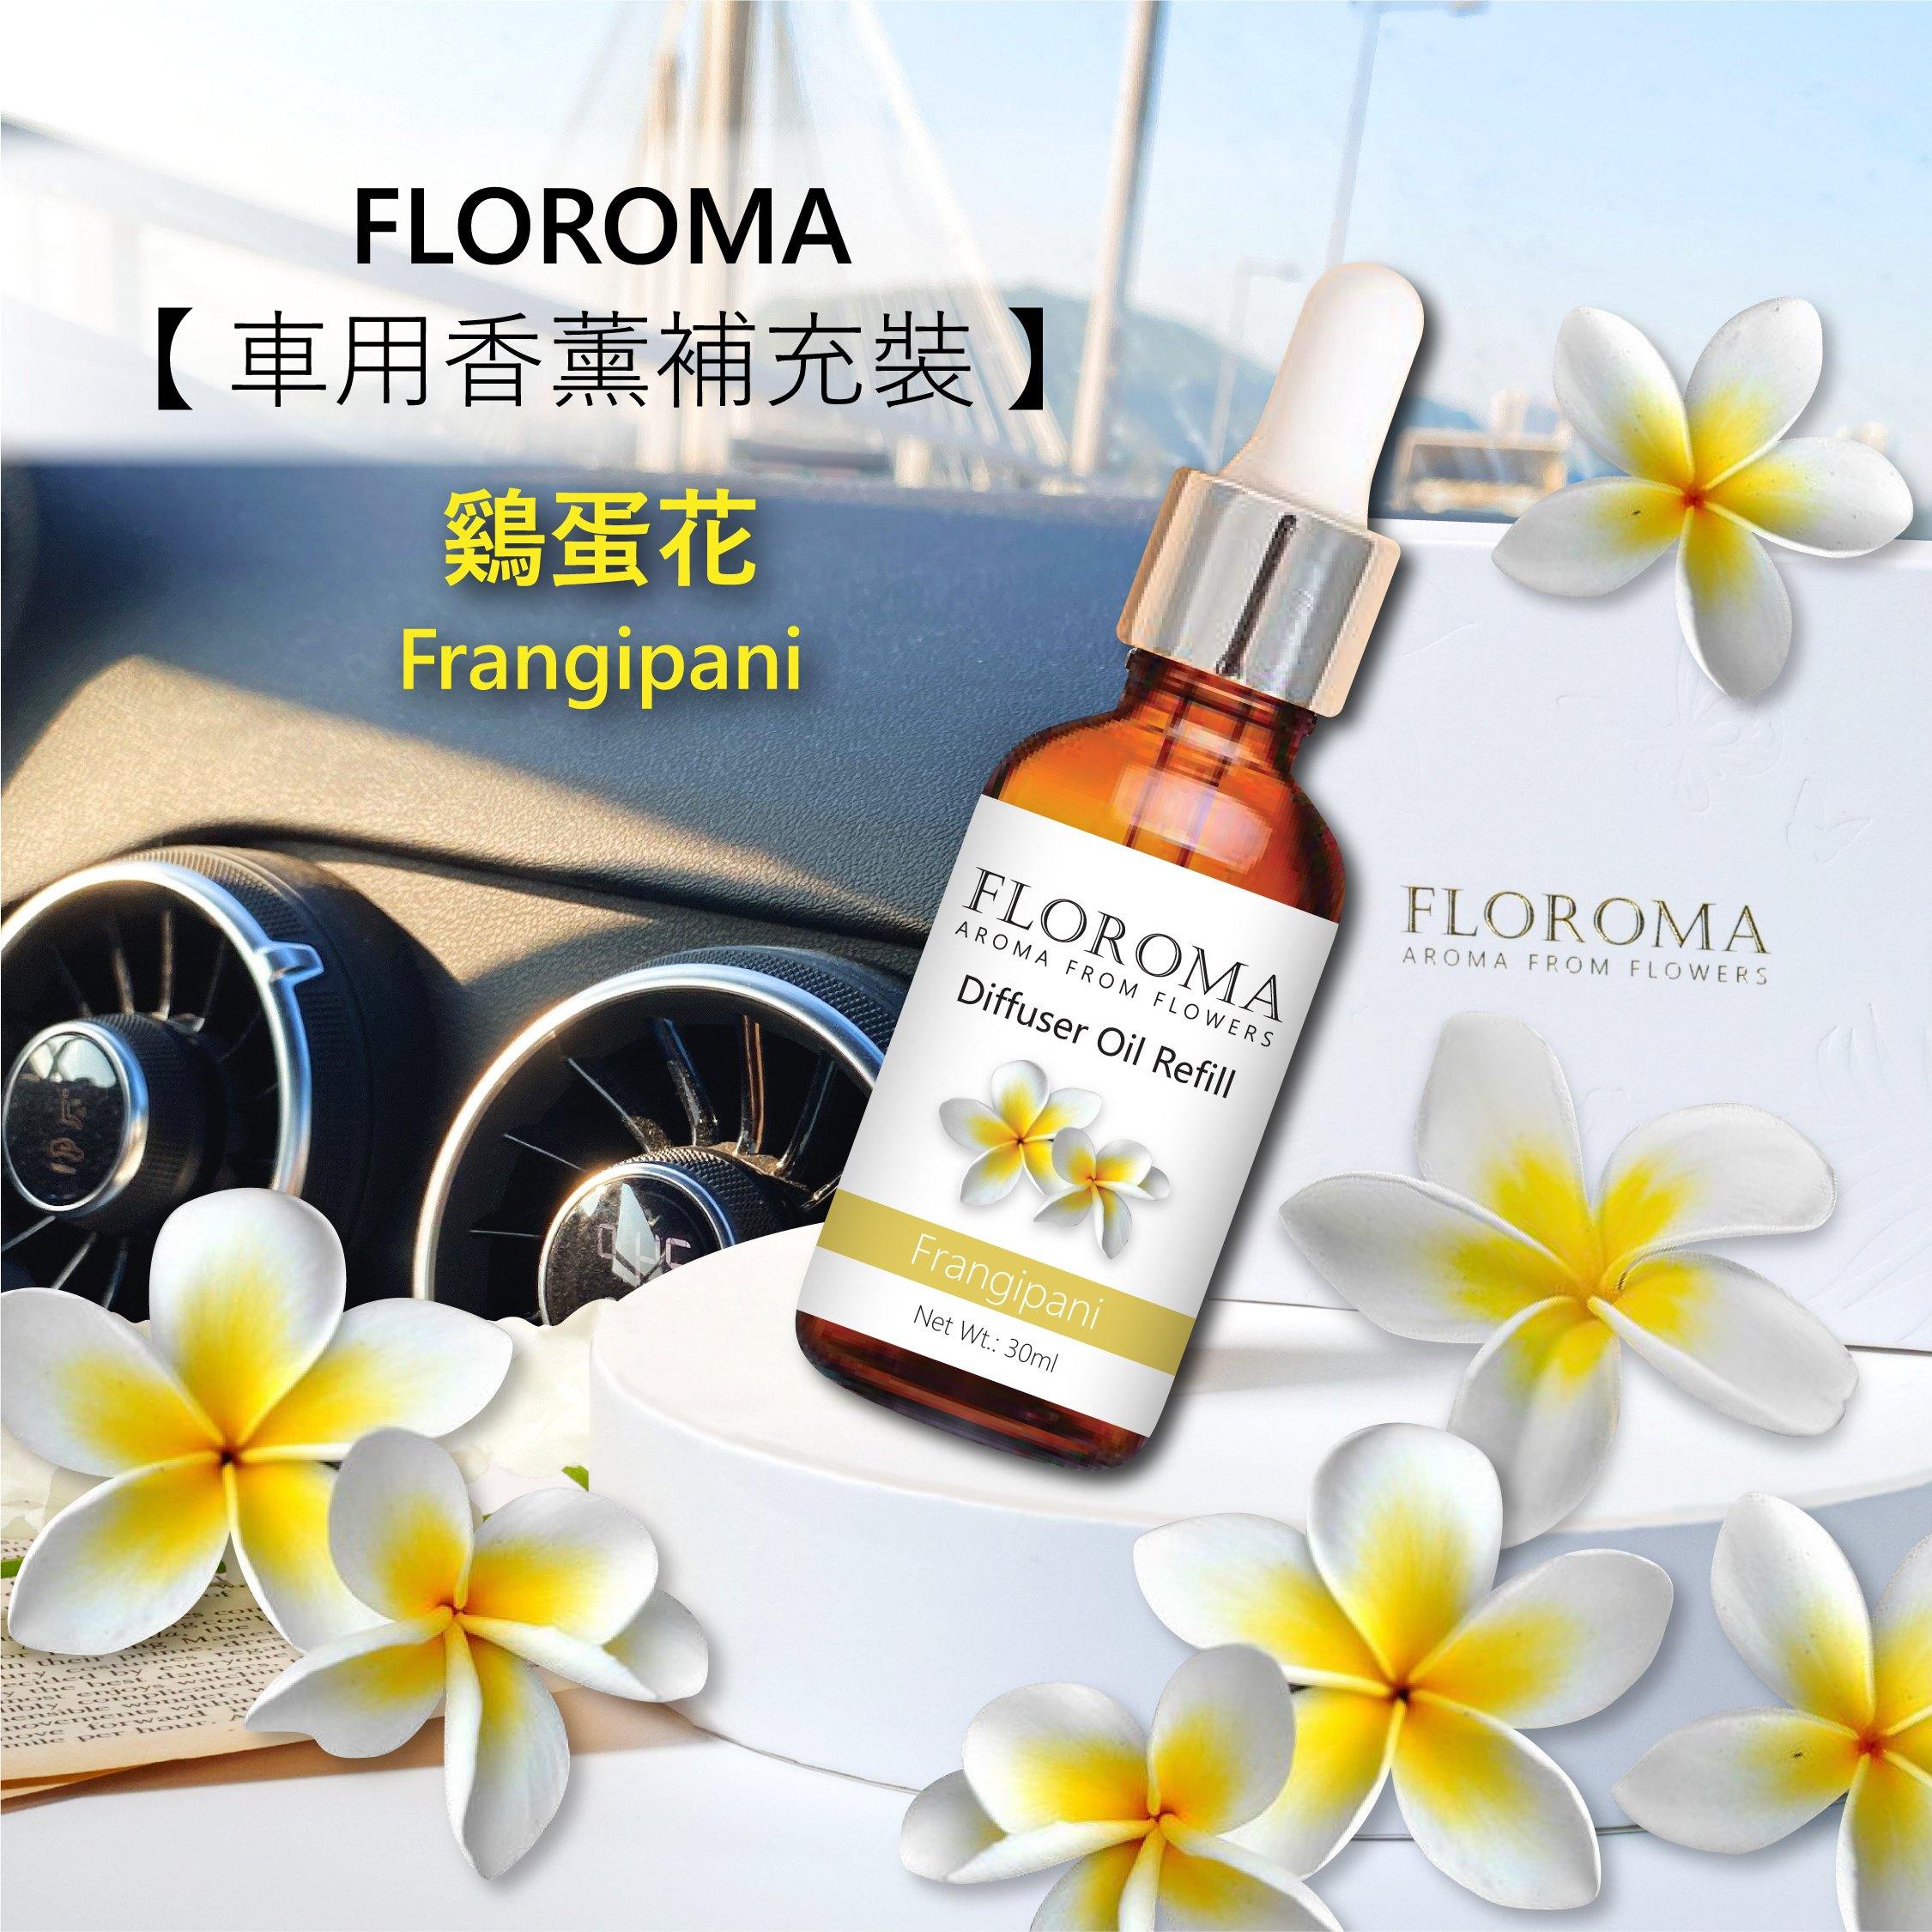 新!! 花之滴【車用香薰補充裝】2支套裝 (自選香味組合) Car Diffuser Oil Refill Set - Floroma 花の滴